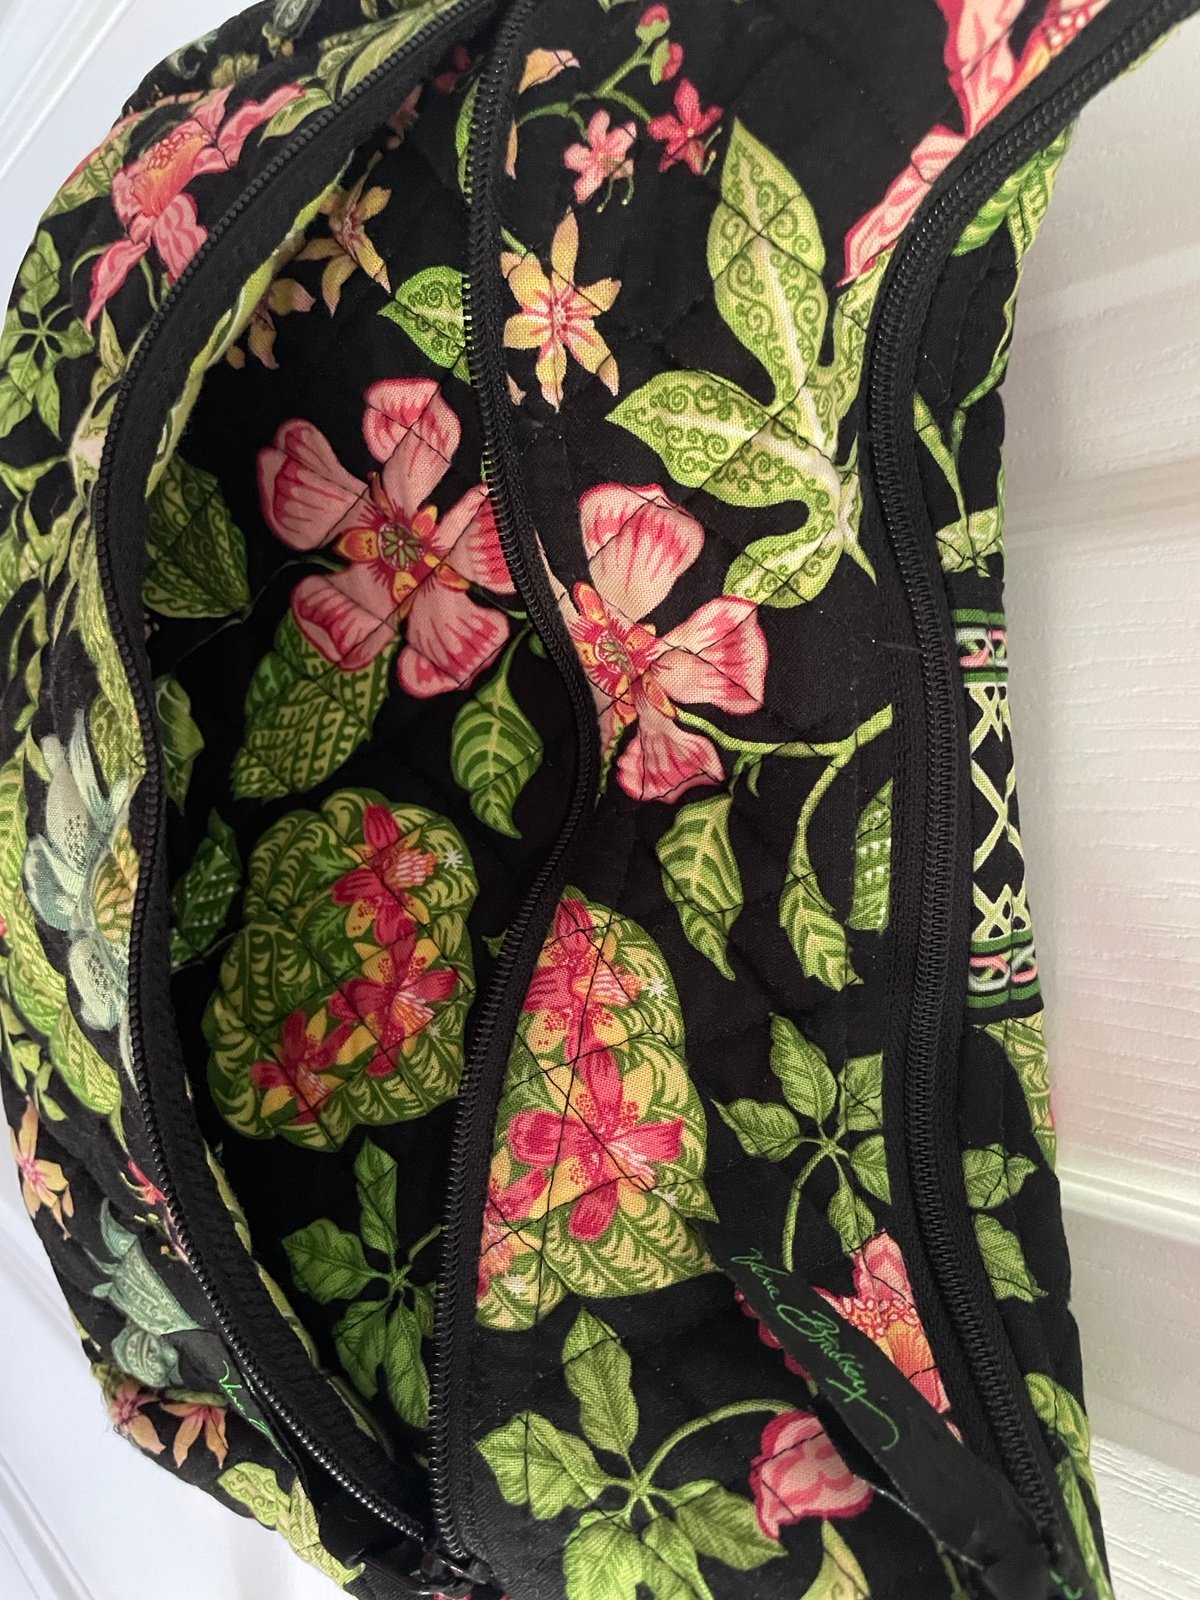 Vera Bradley Retired ‘Botanica’ Black/Green Floral Shoulder Bag dUtiKUcPk